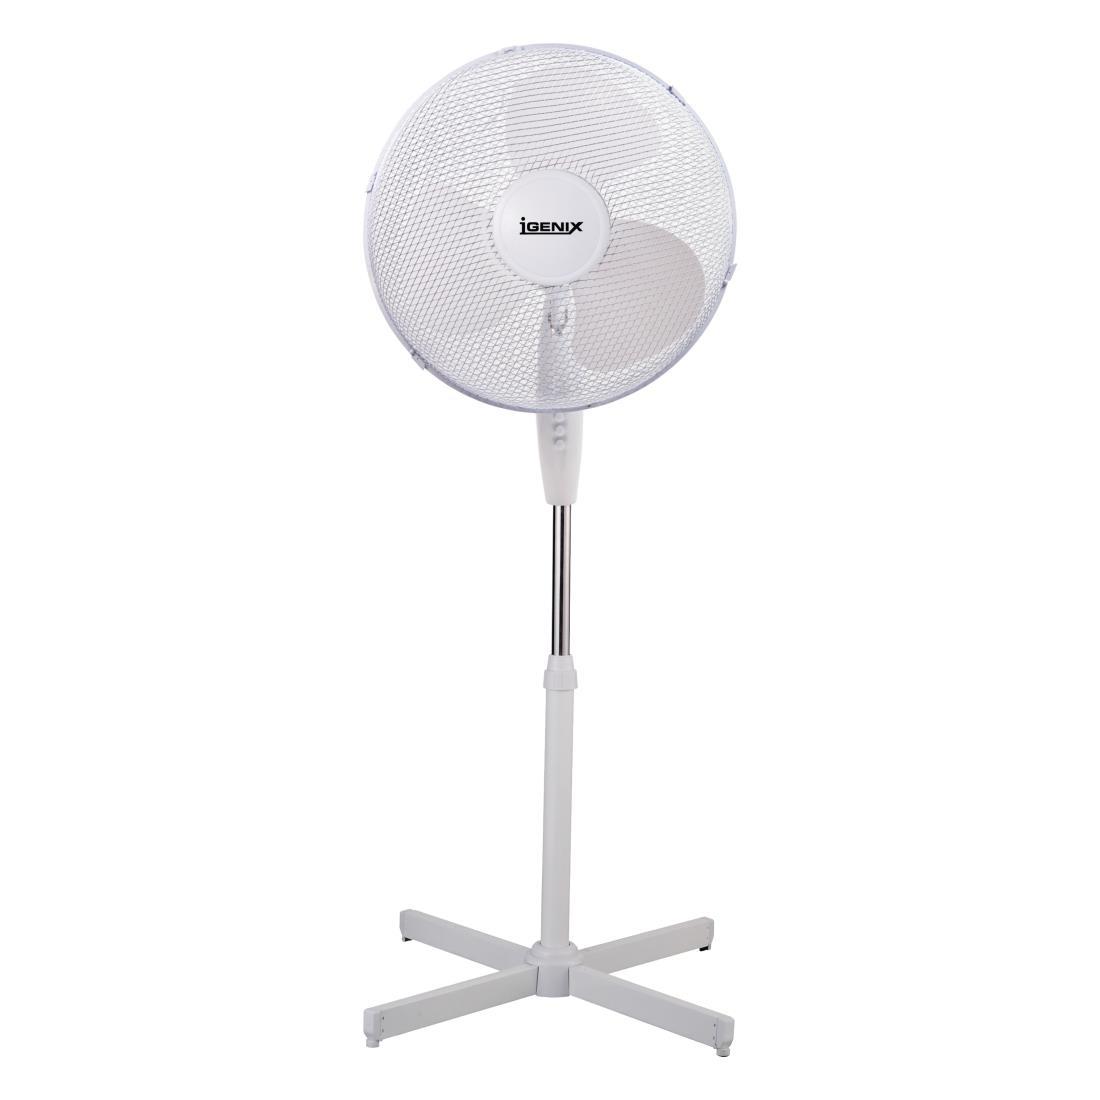 Igenix 16" Oscillating White Stand Fan - GR389  - 1